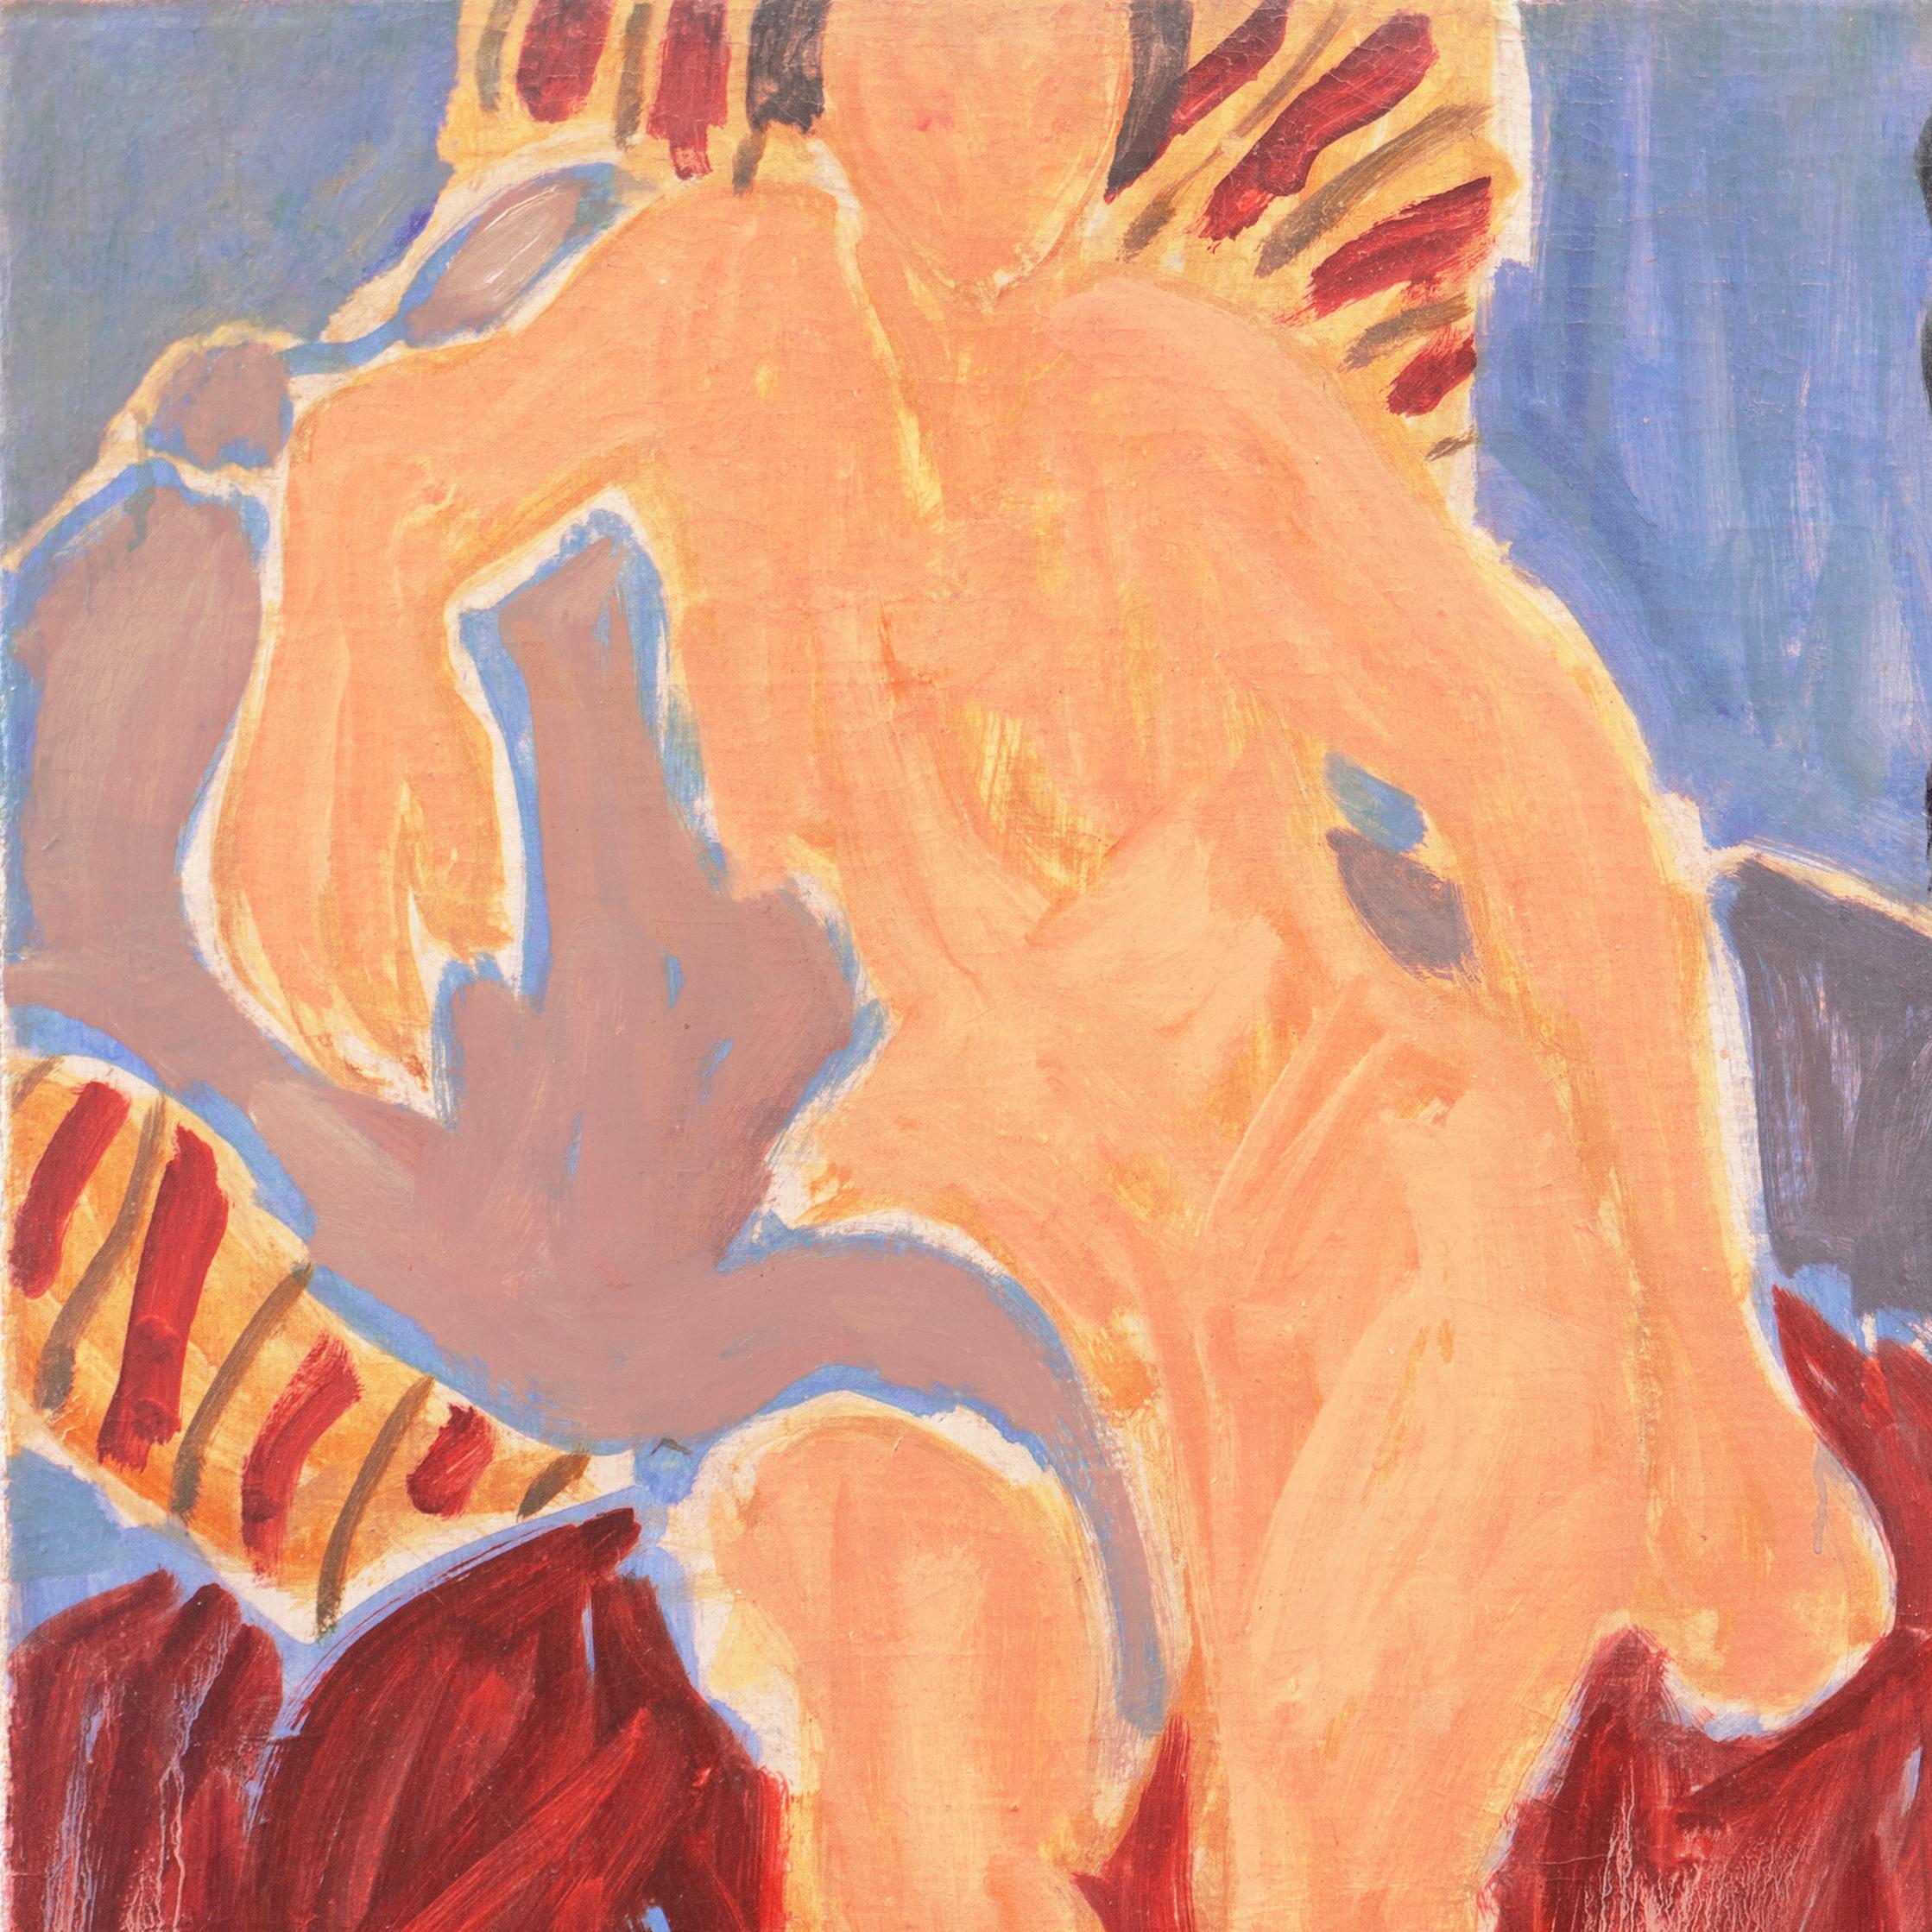 „Sitzender Akt“, Paris, Louvre, Academie Chaumiere, Carmel, Kalifornien, LACMA, Öl (Post-Impressionismus), Painting, von Victor Di Gesu